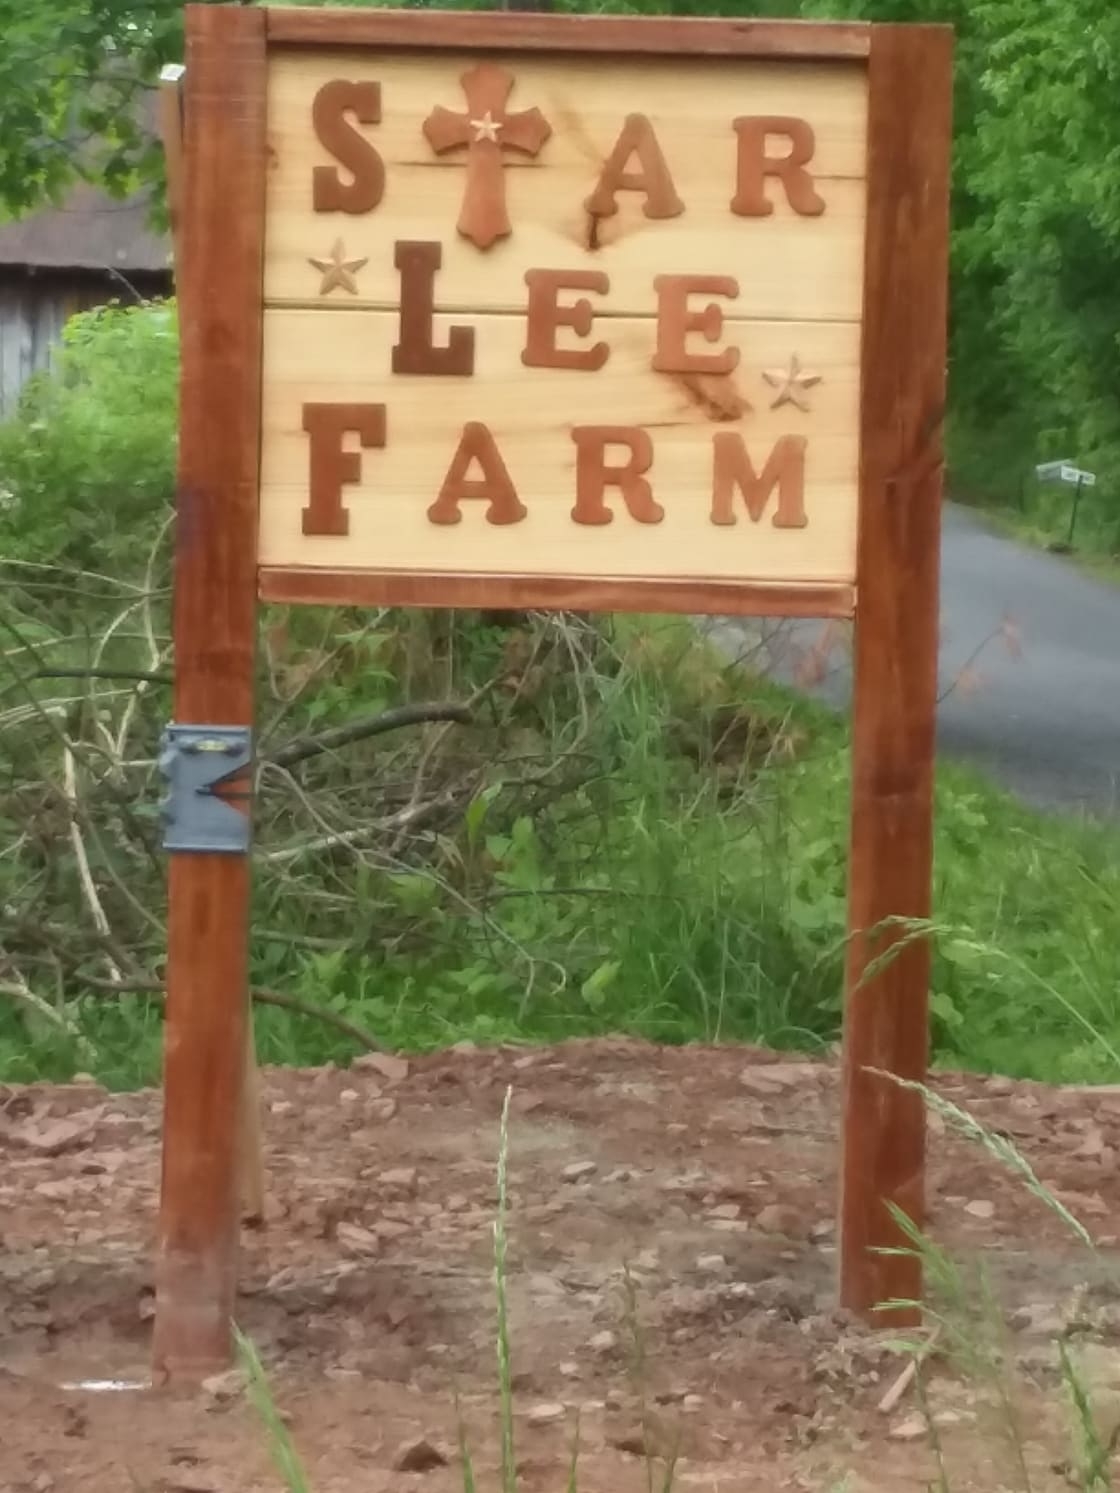 Star Lee Farm